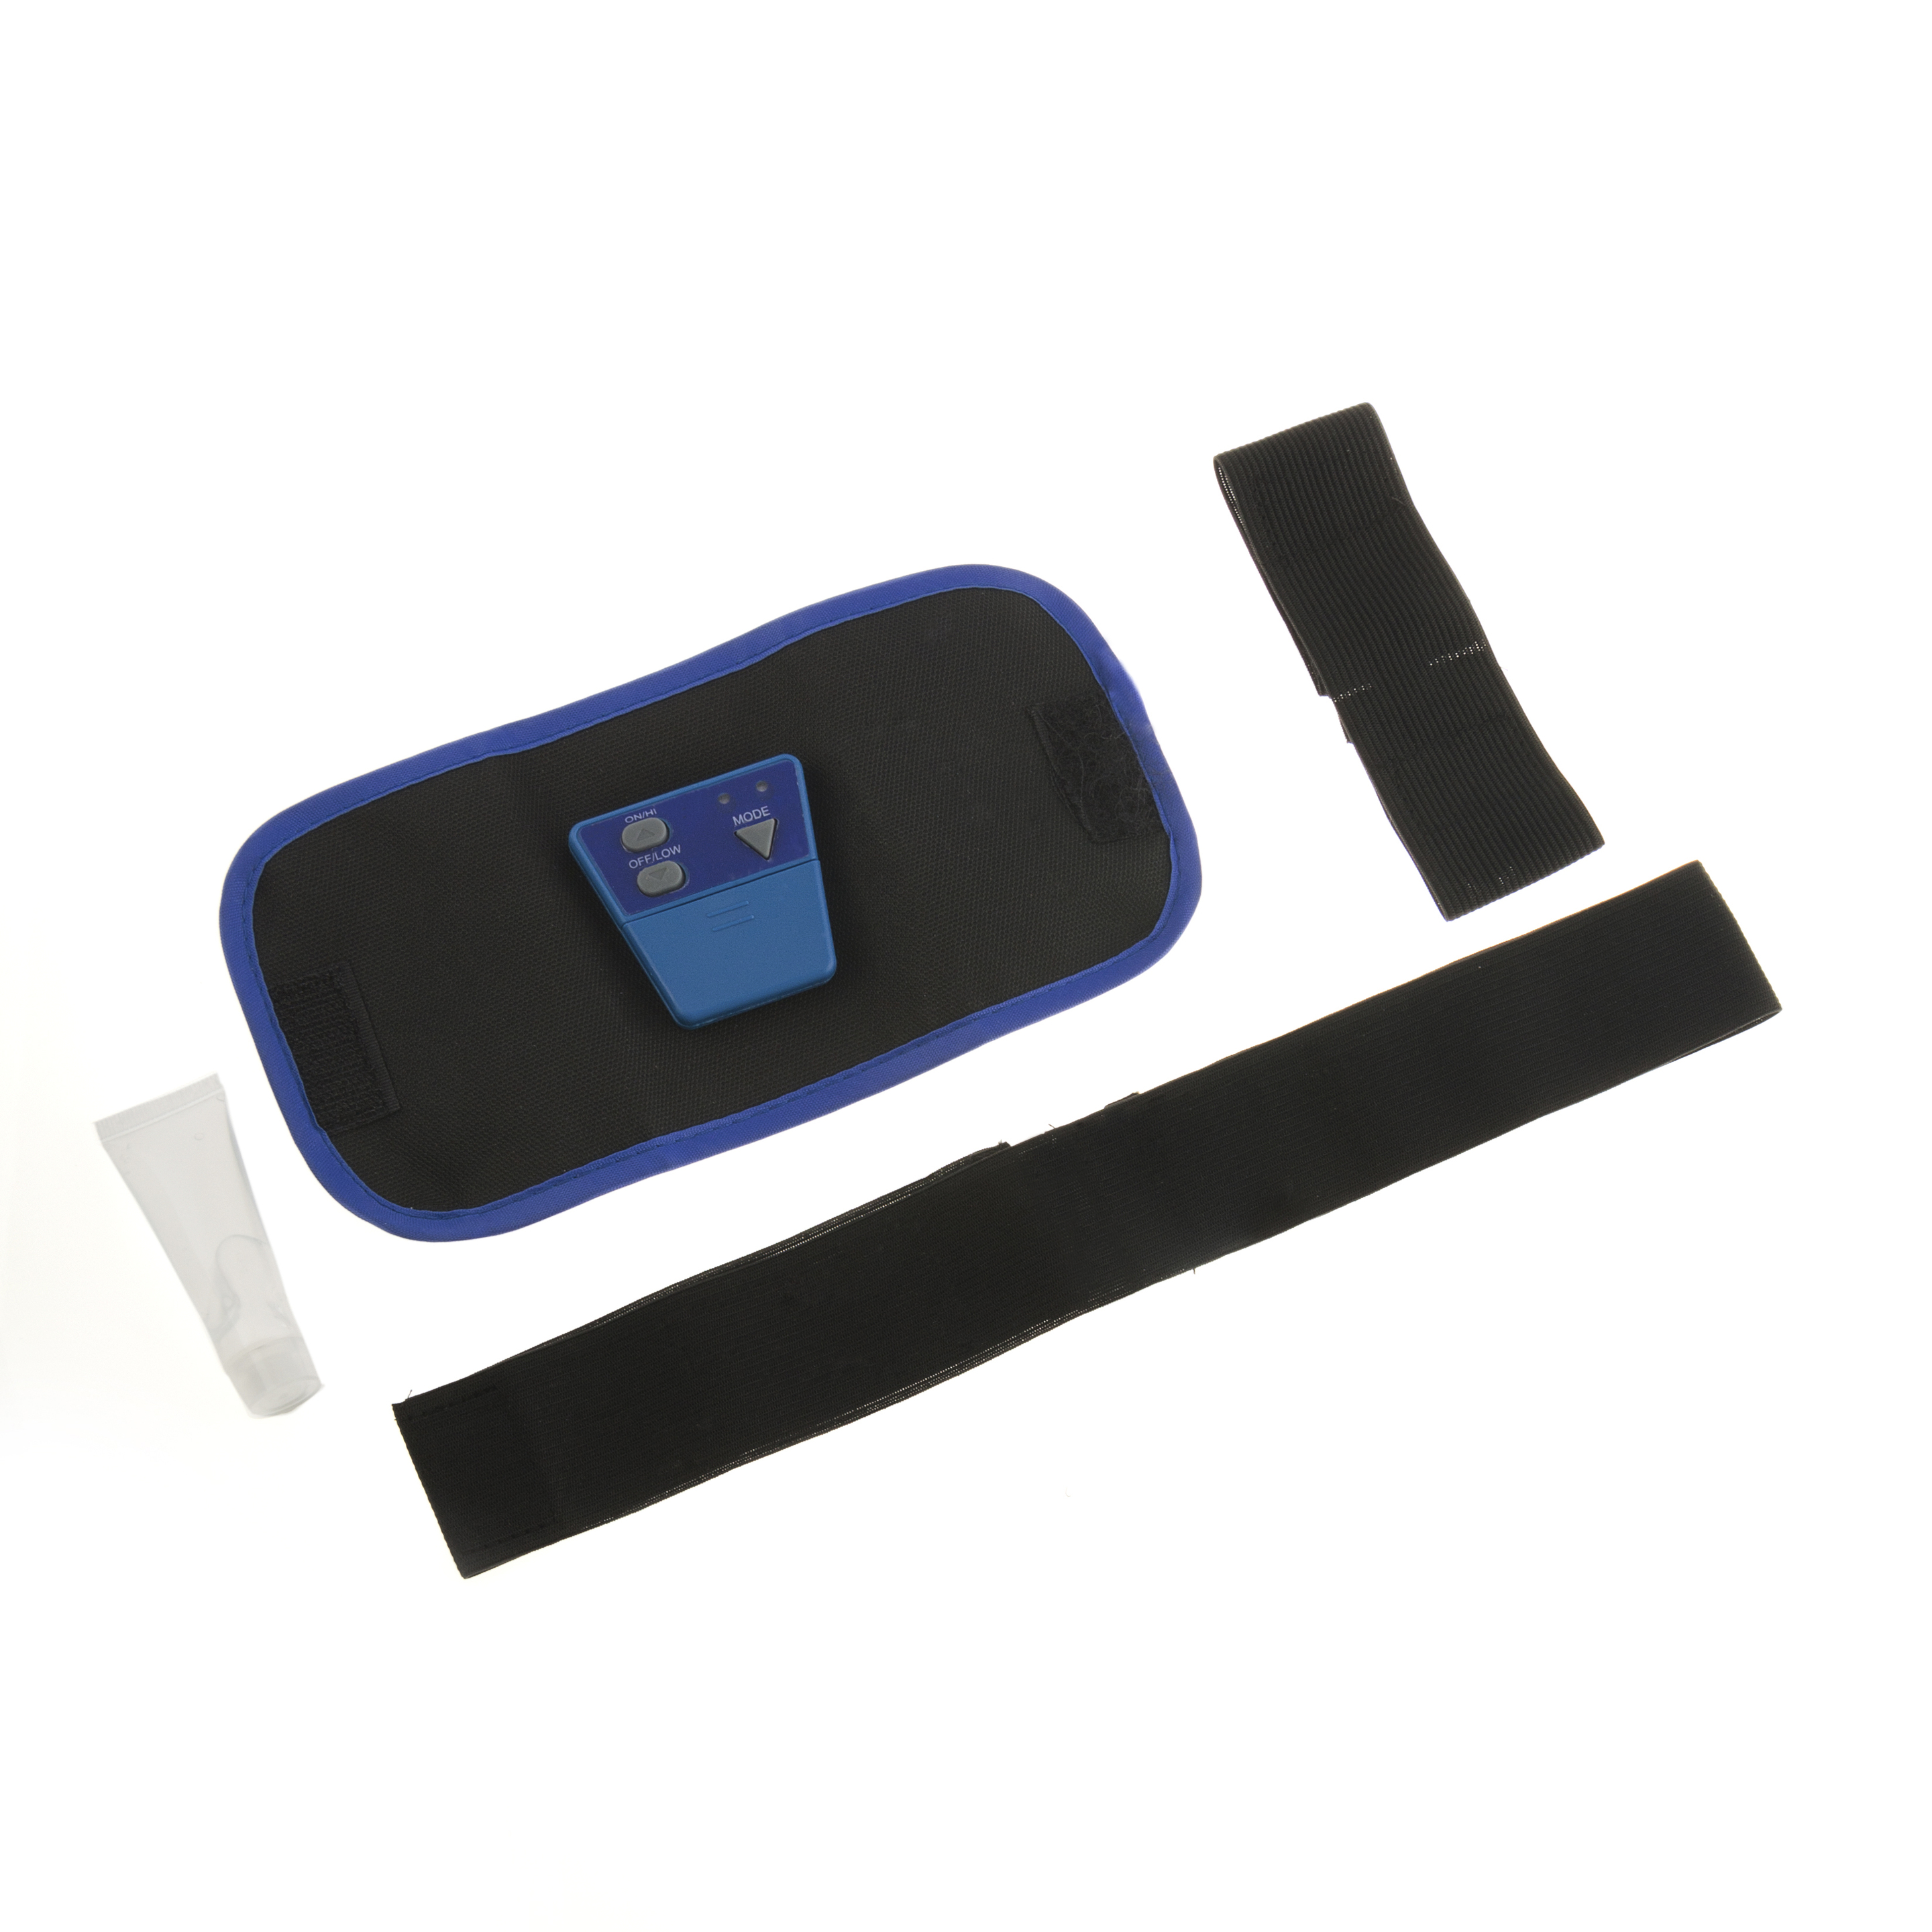 Electroestimulador Muscular, Cinturón, Tpu, Azul Y Negro, 5 X 21 X 14,5cm - Negro/Azul  MKP